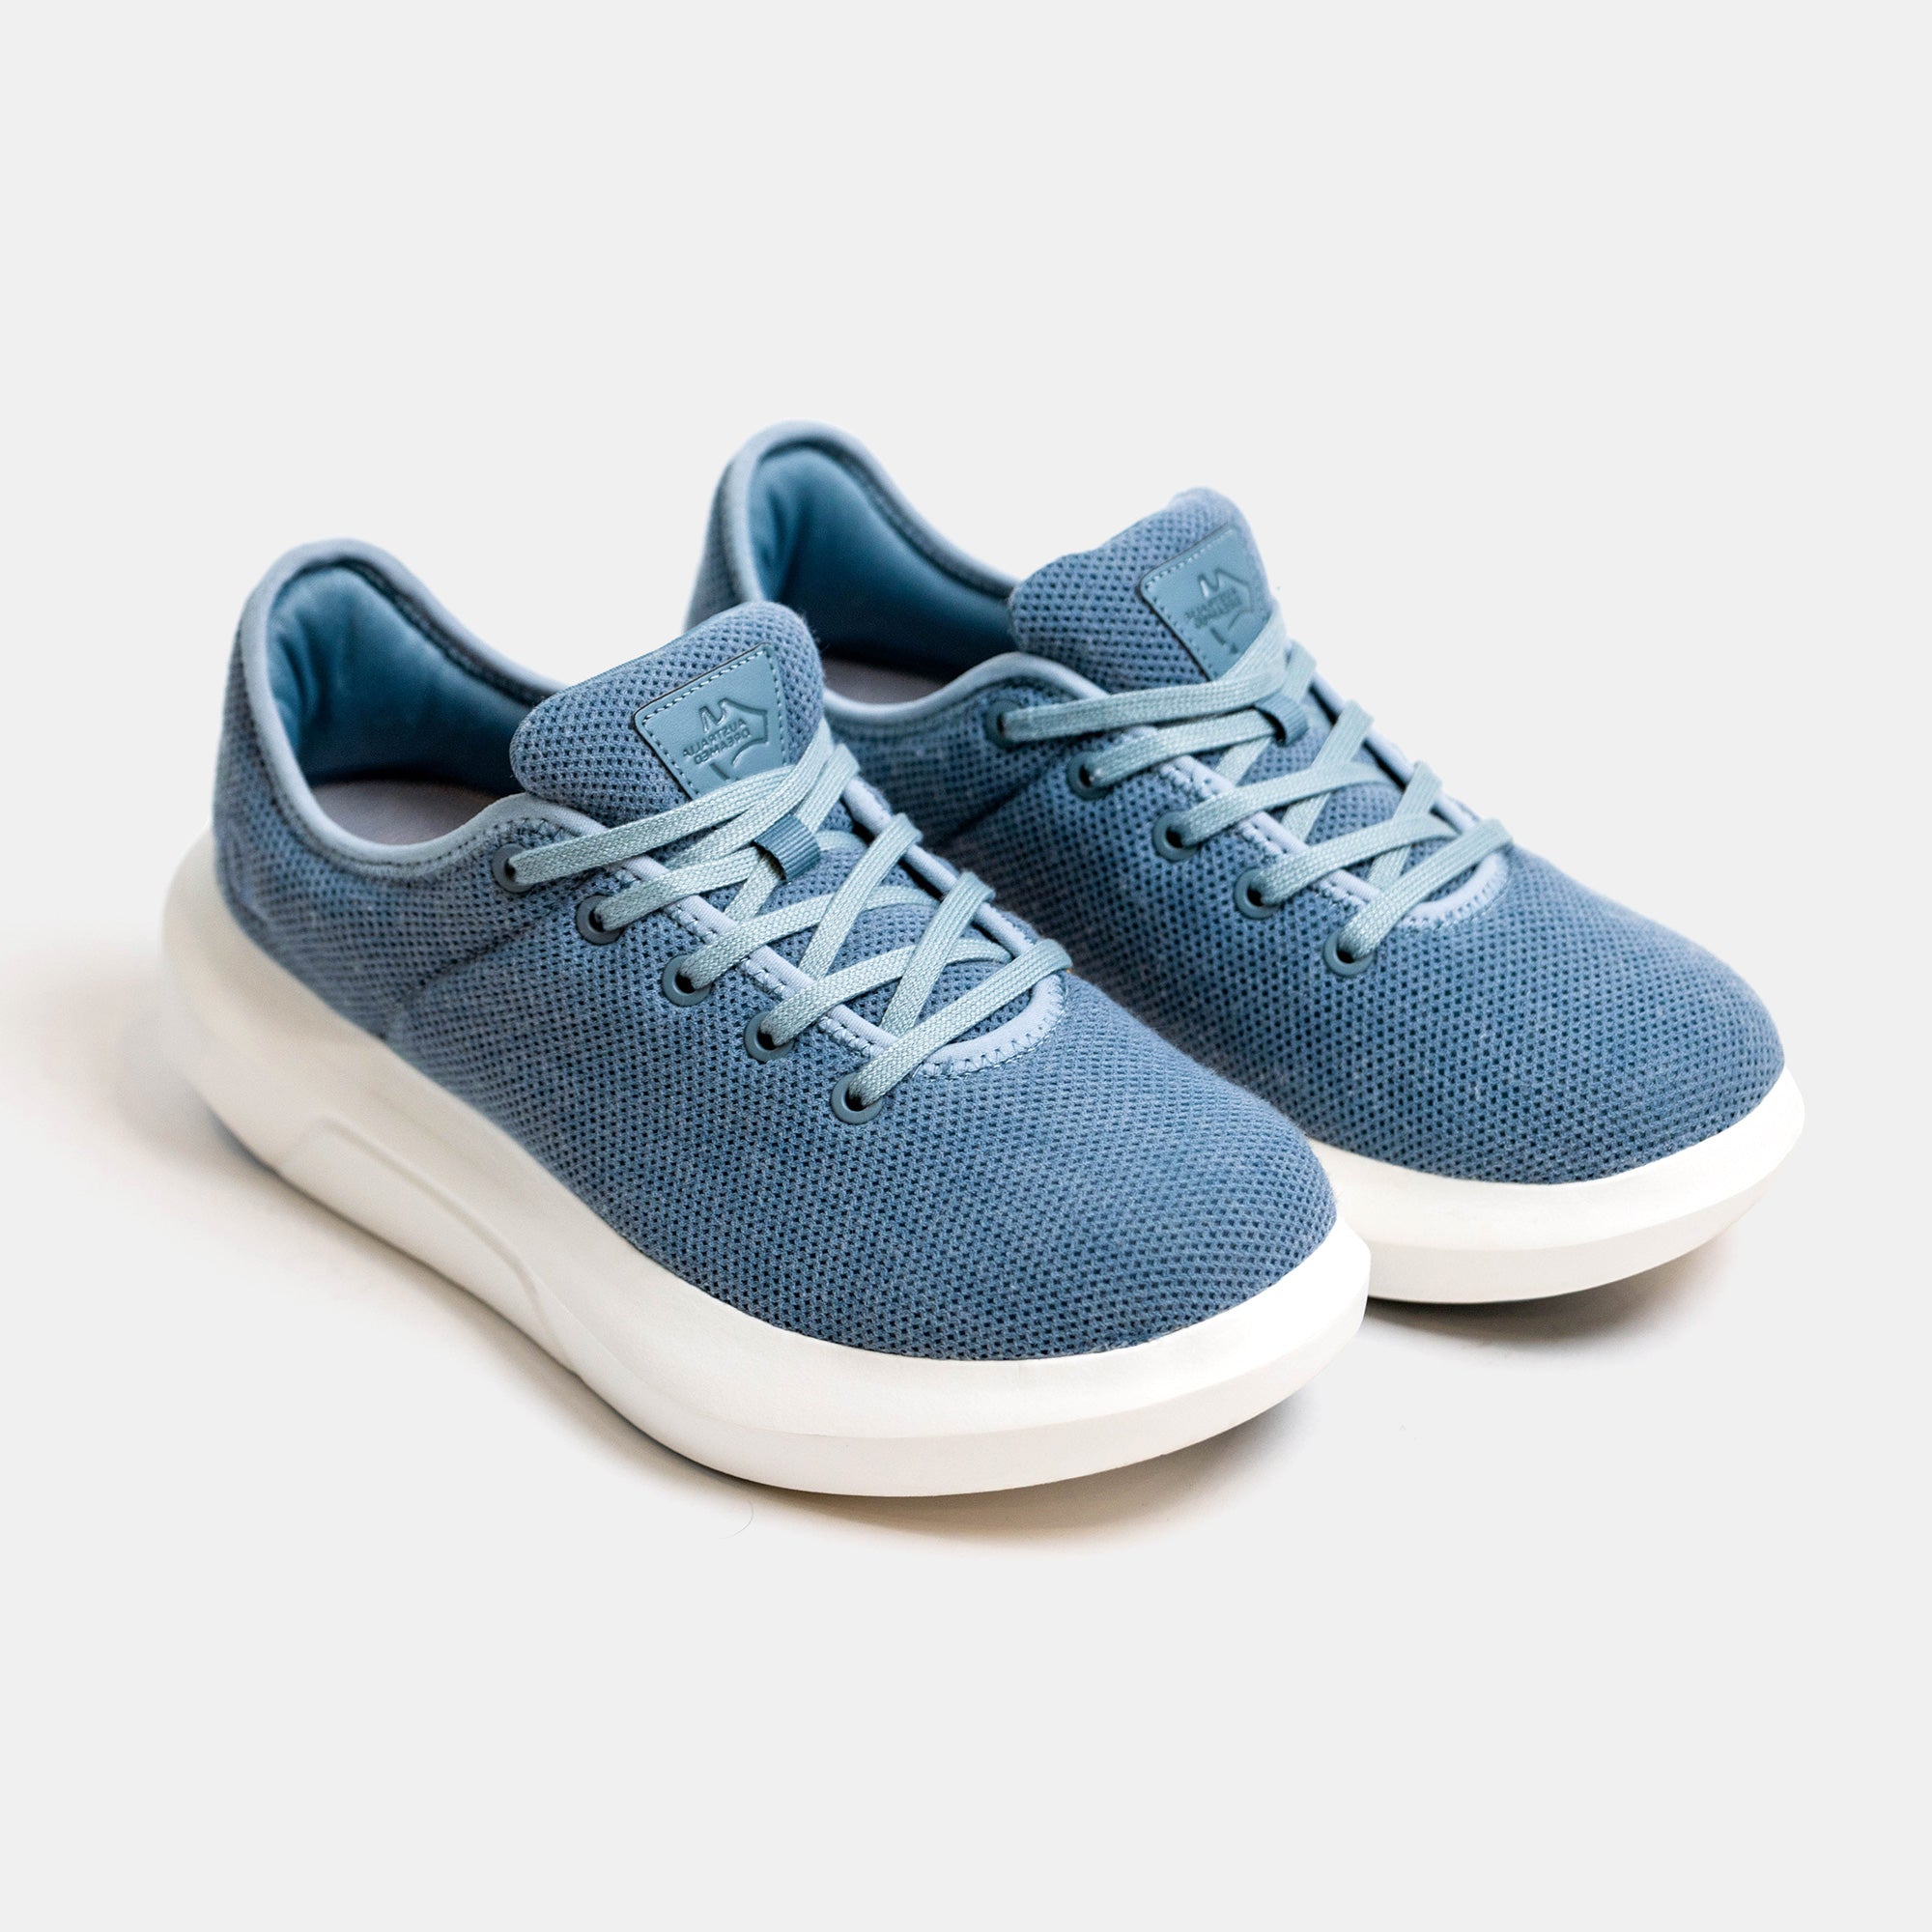 Comfort Plus Sneaker Walking Shoe - Mist